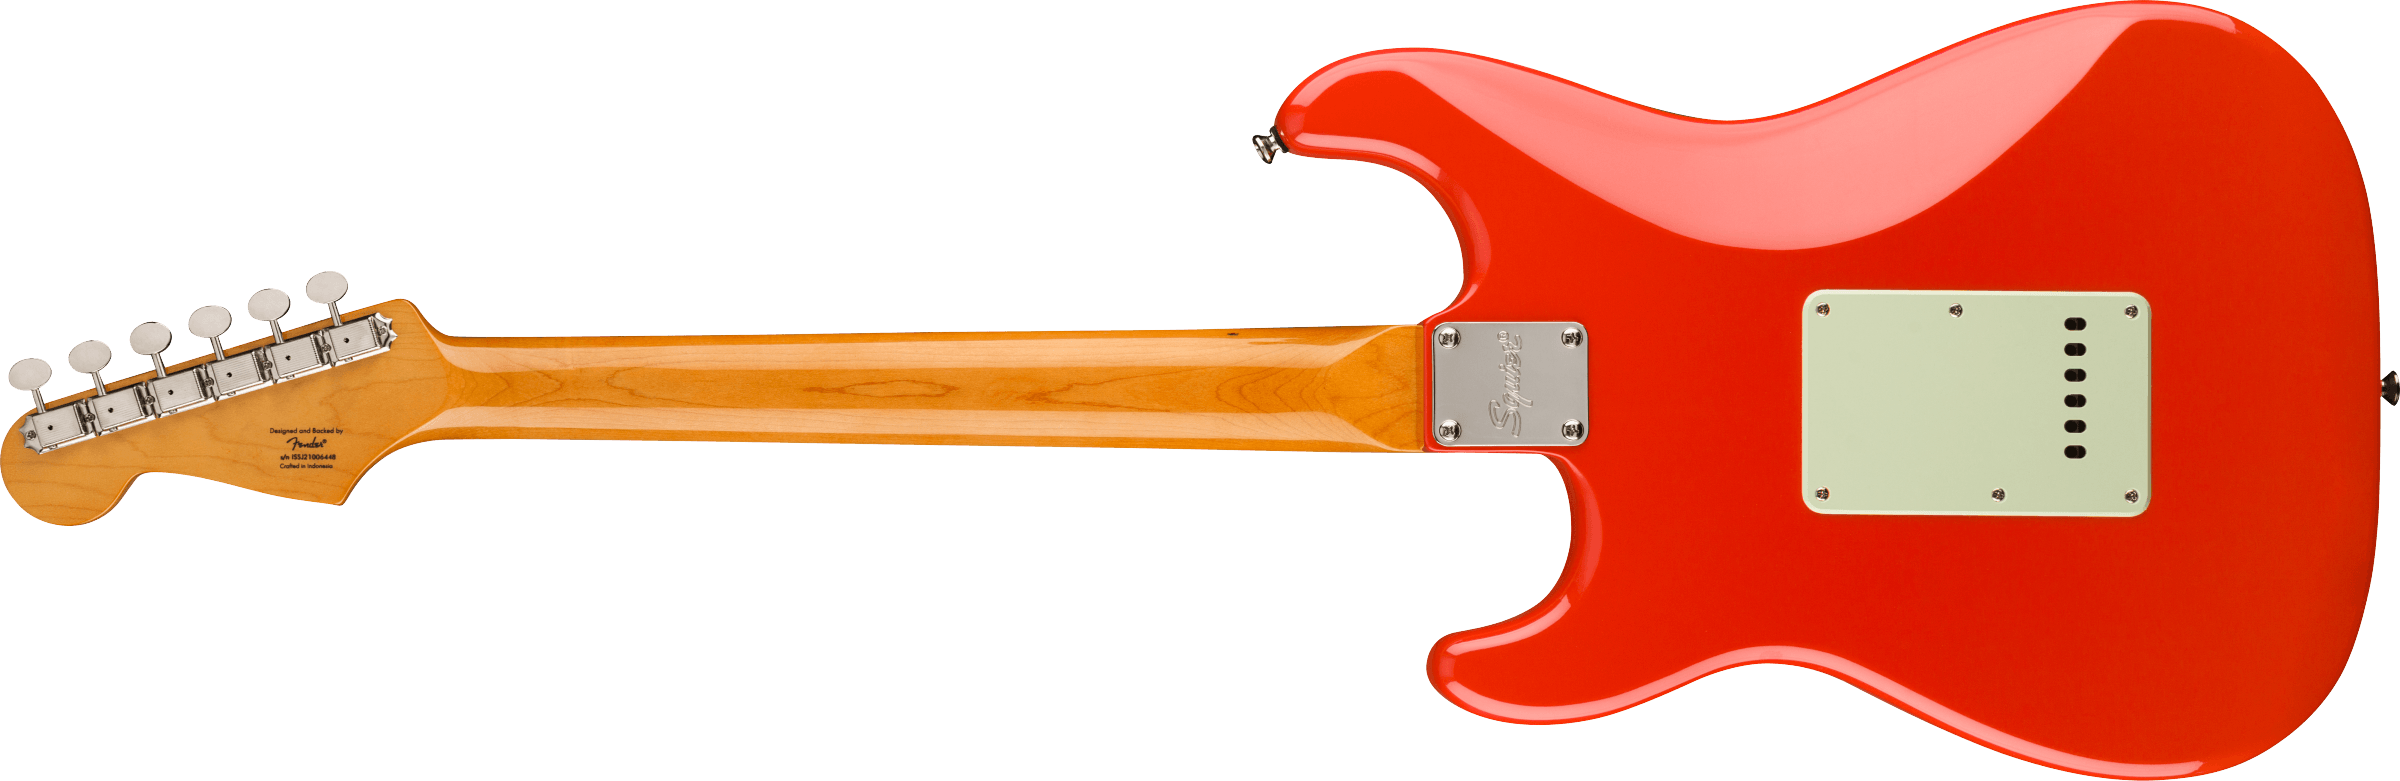 Squier Strat '60s Classic Vibe Fsr Ltd Lau - Fiesta Red - Str shape electric guitar - Variation 2